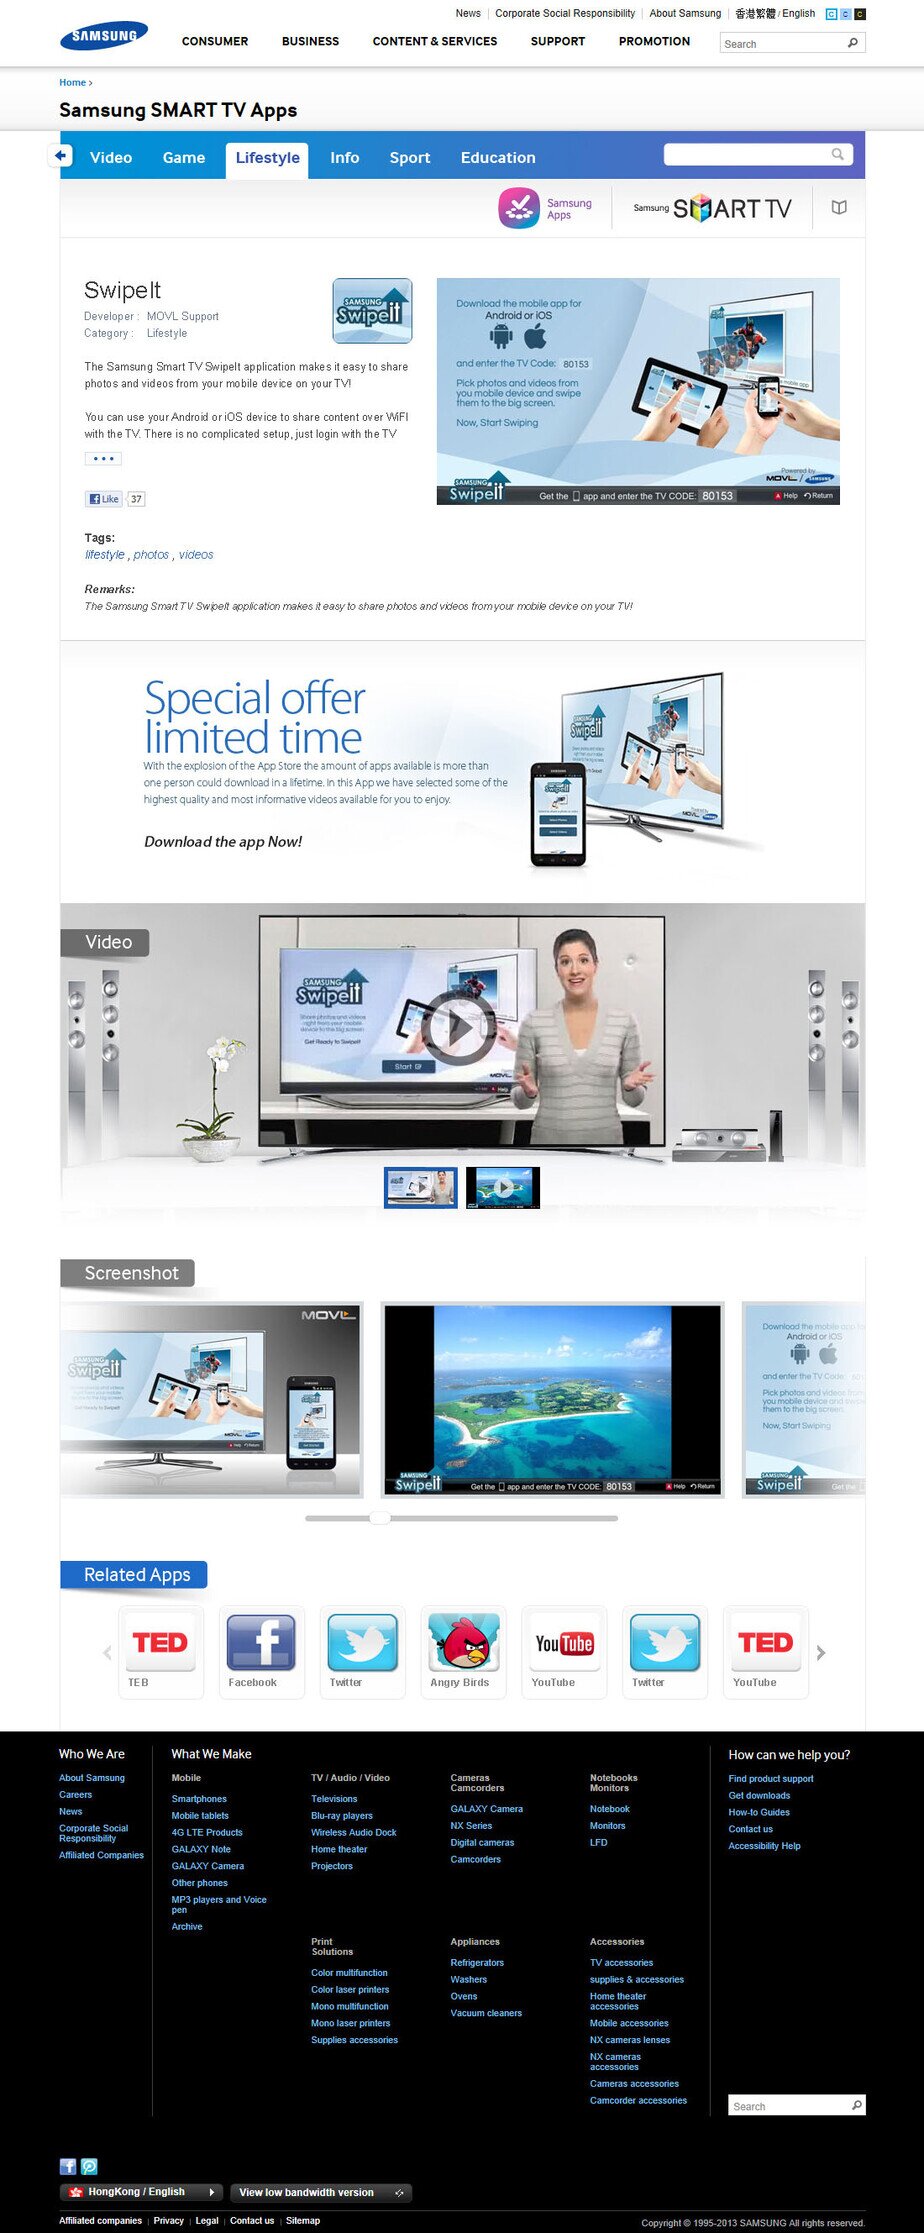 Samsung website screenshot for desktop version 3 of 5